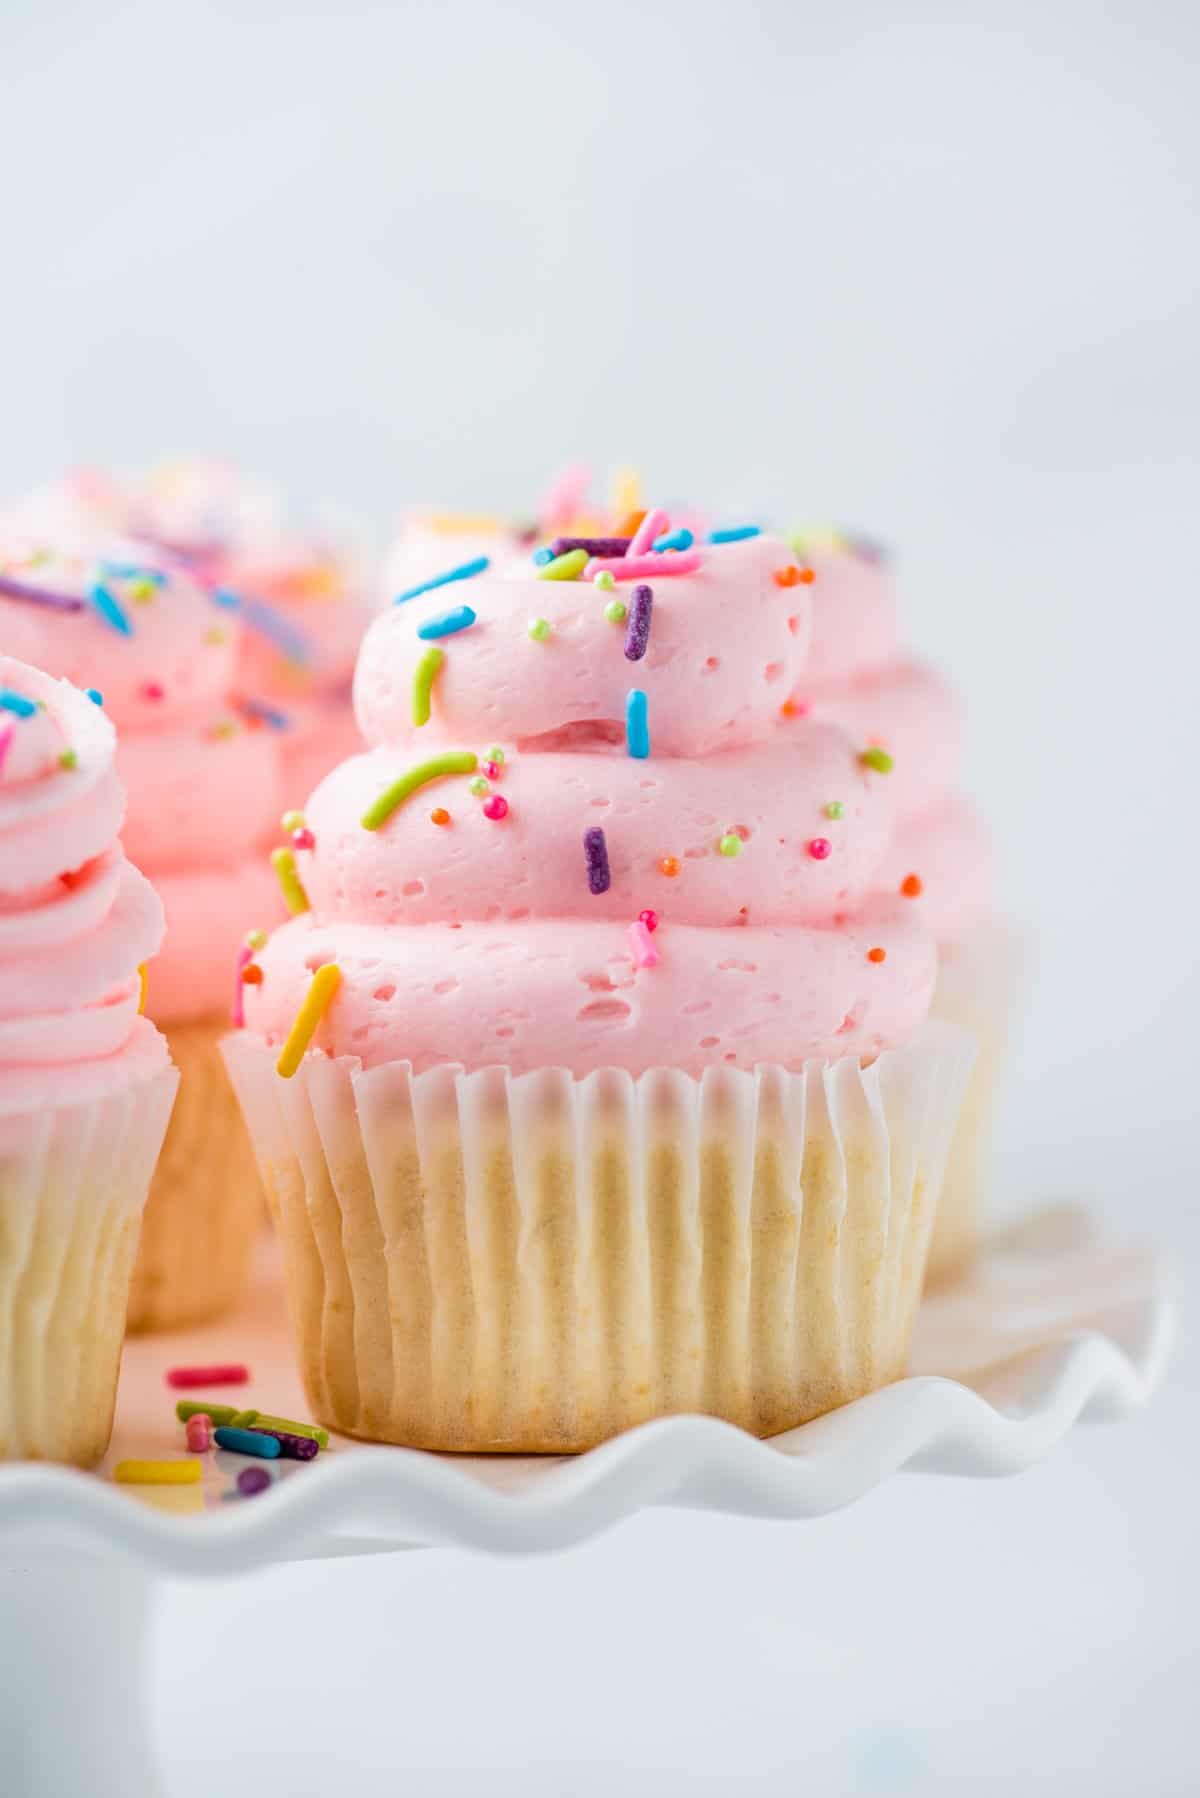 Gluten-free cupcake on cake stand